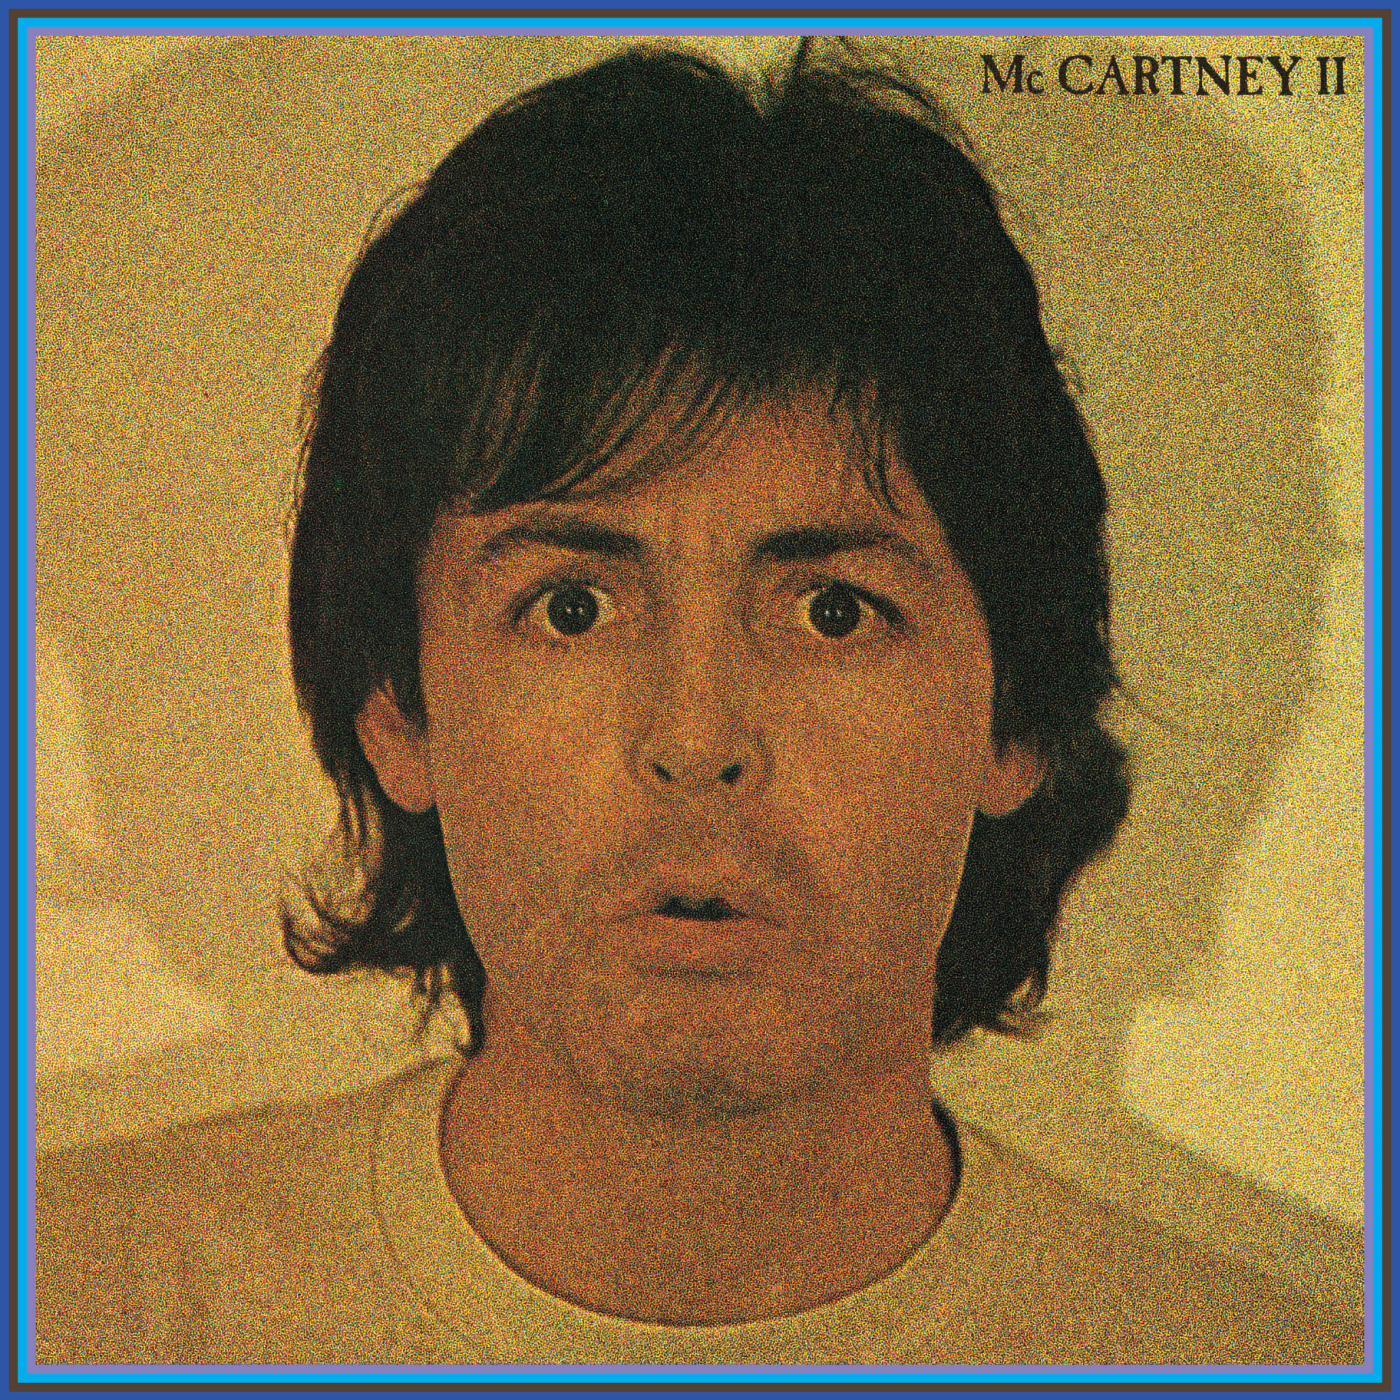 Paul McCartney-McCartney II-24-96-WEB-FLAC-REMASTERED-2011-OBZEN Download